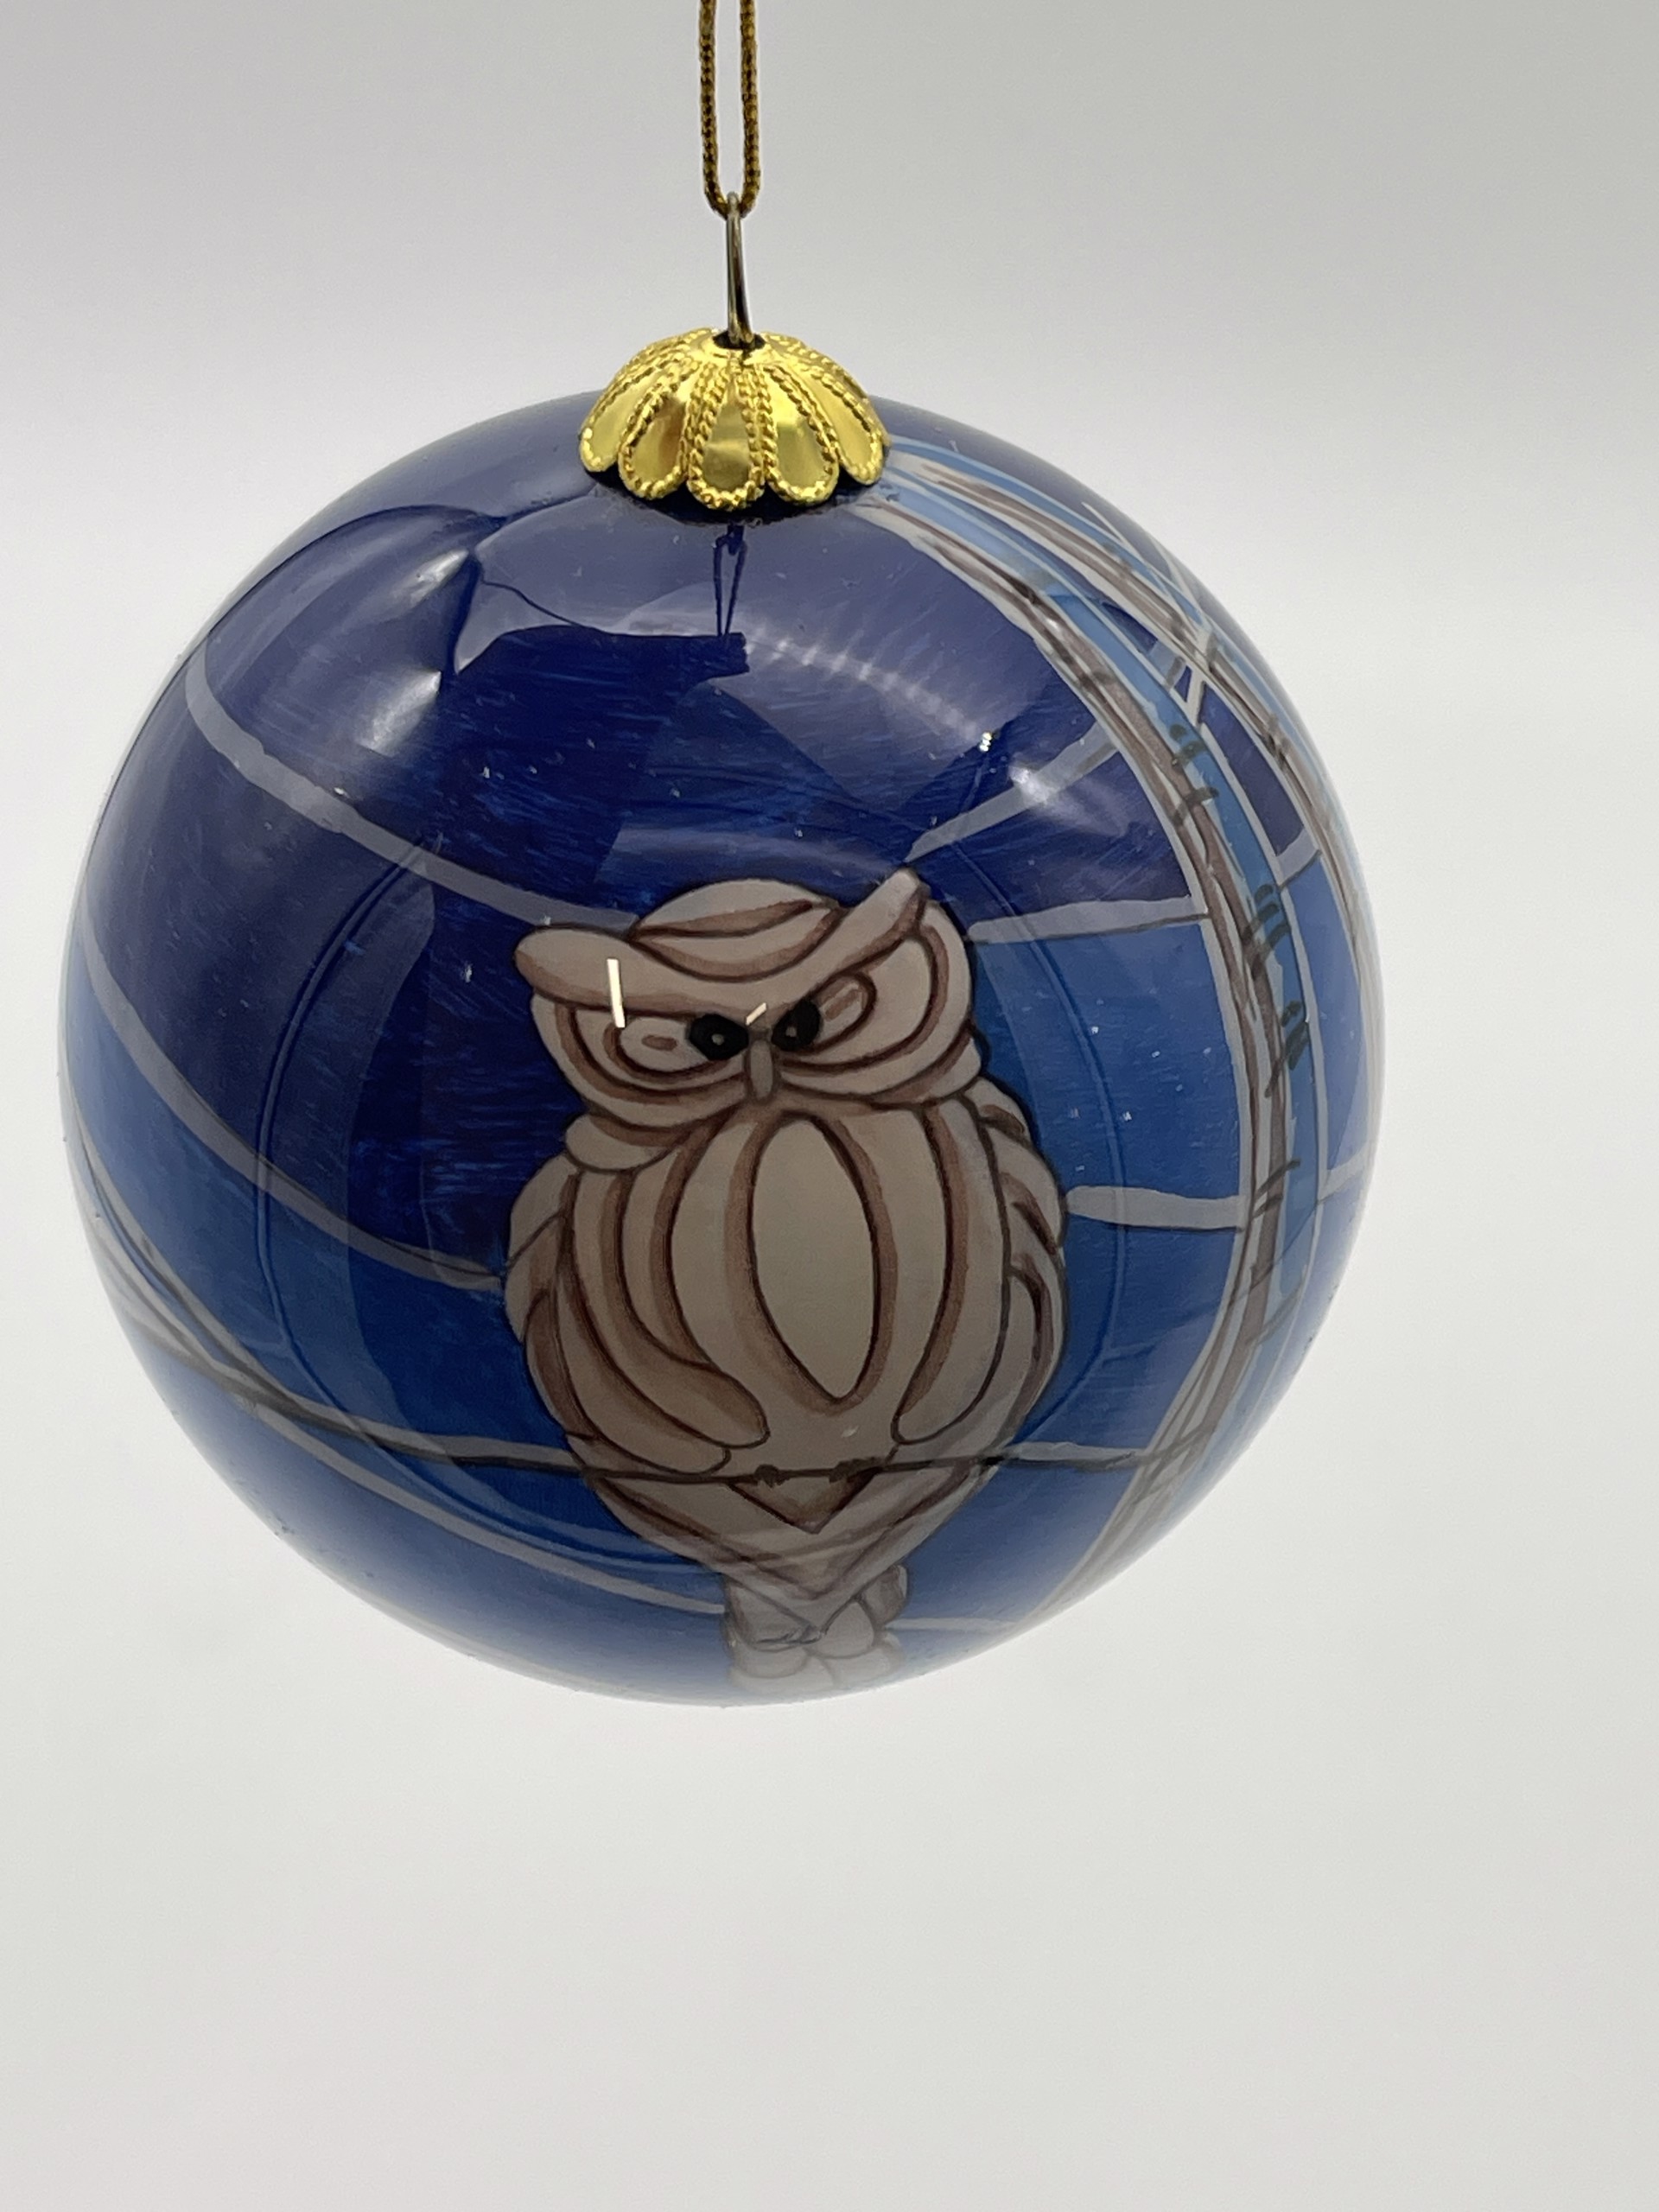 Sway Ornament by Robbie Craig